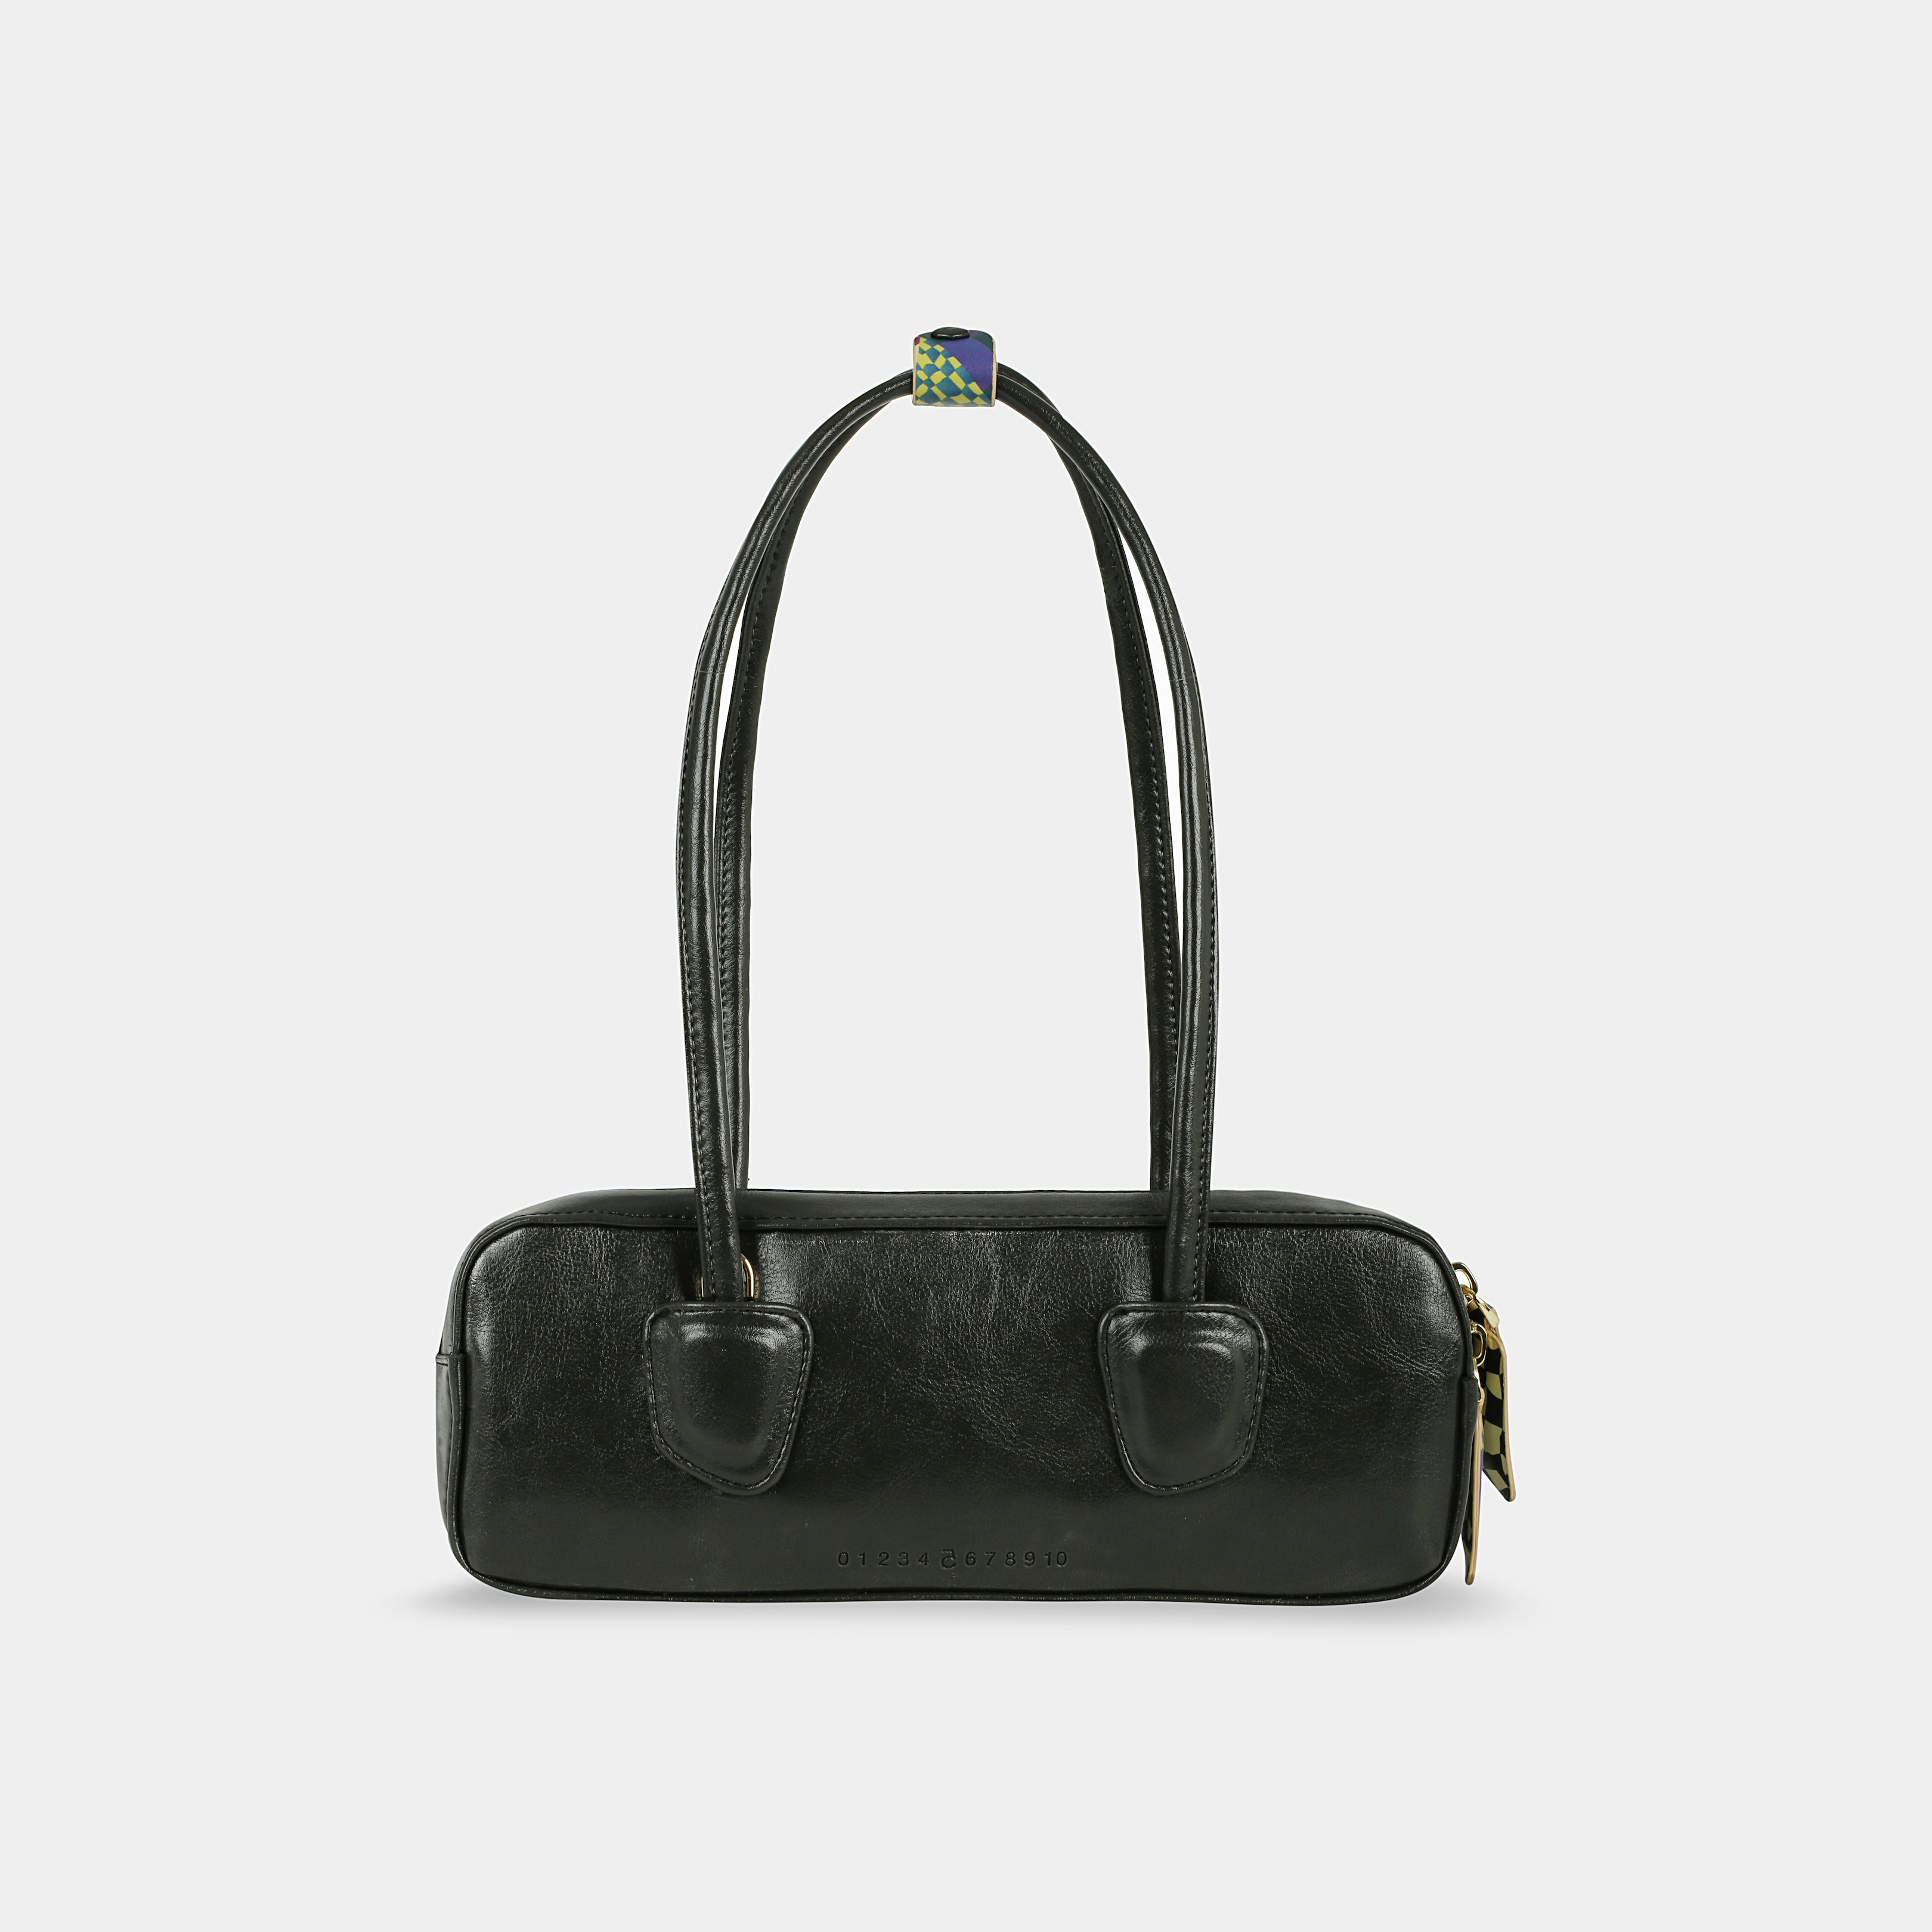 BREAKING bag in black color